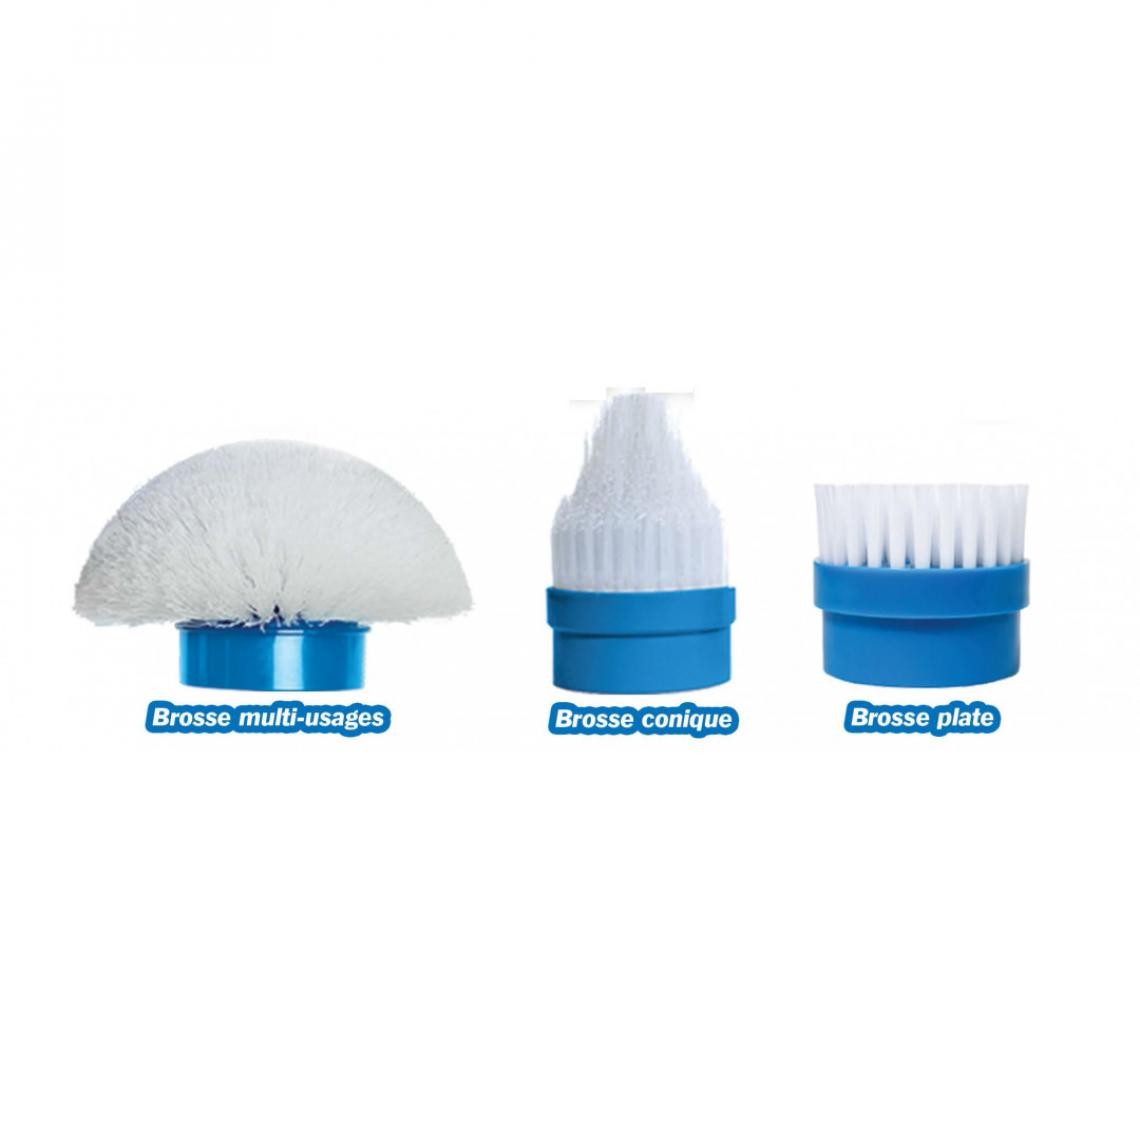 Venteo - 3 brosses ACTI BRUSH - TELESHOPPING - Blanc/Bleu - Adulte - Recharge Acti Brush - Aspirateur balai